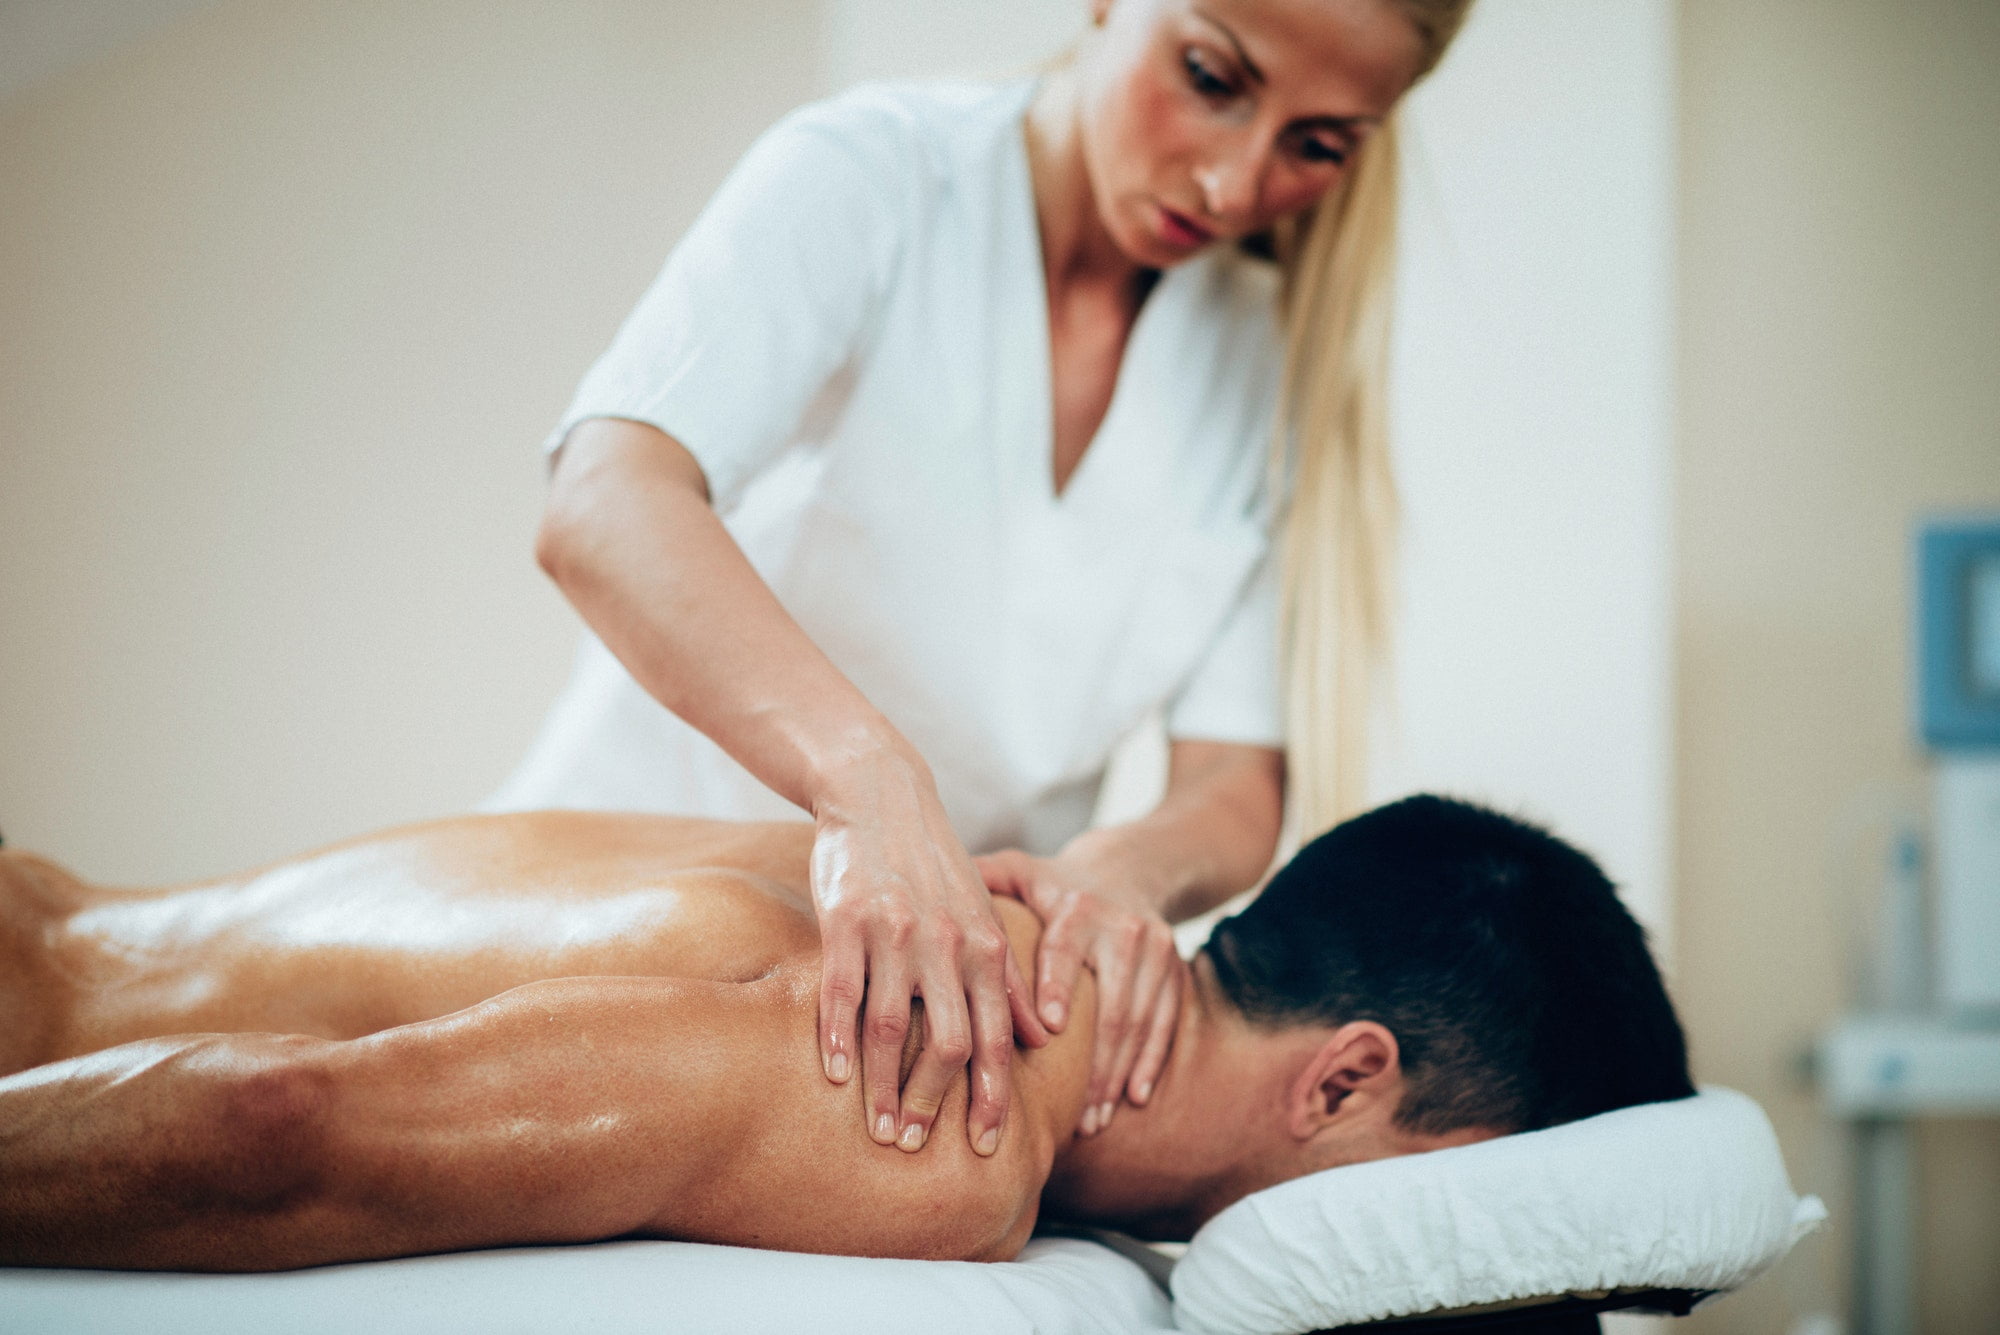 sports-massage-therapist-doing-shoulder-massage.jpg